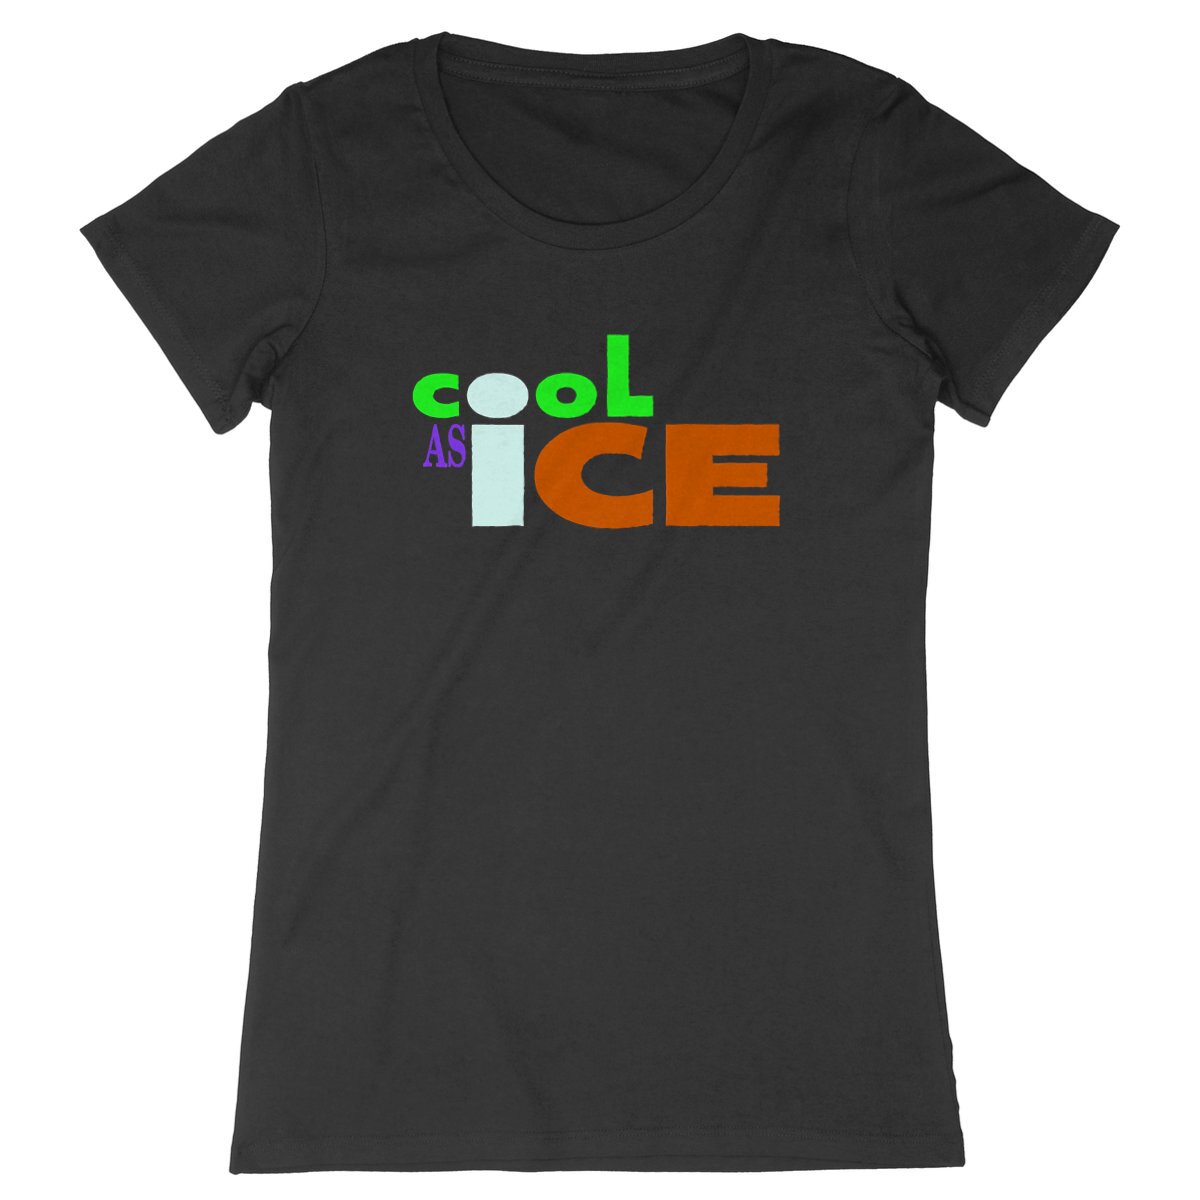 Cool as ICE - T-Shirt - Women